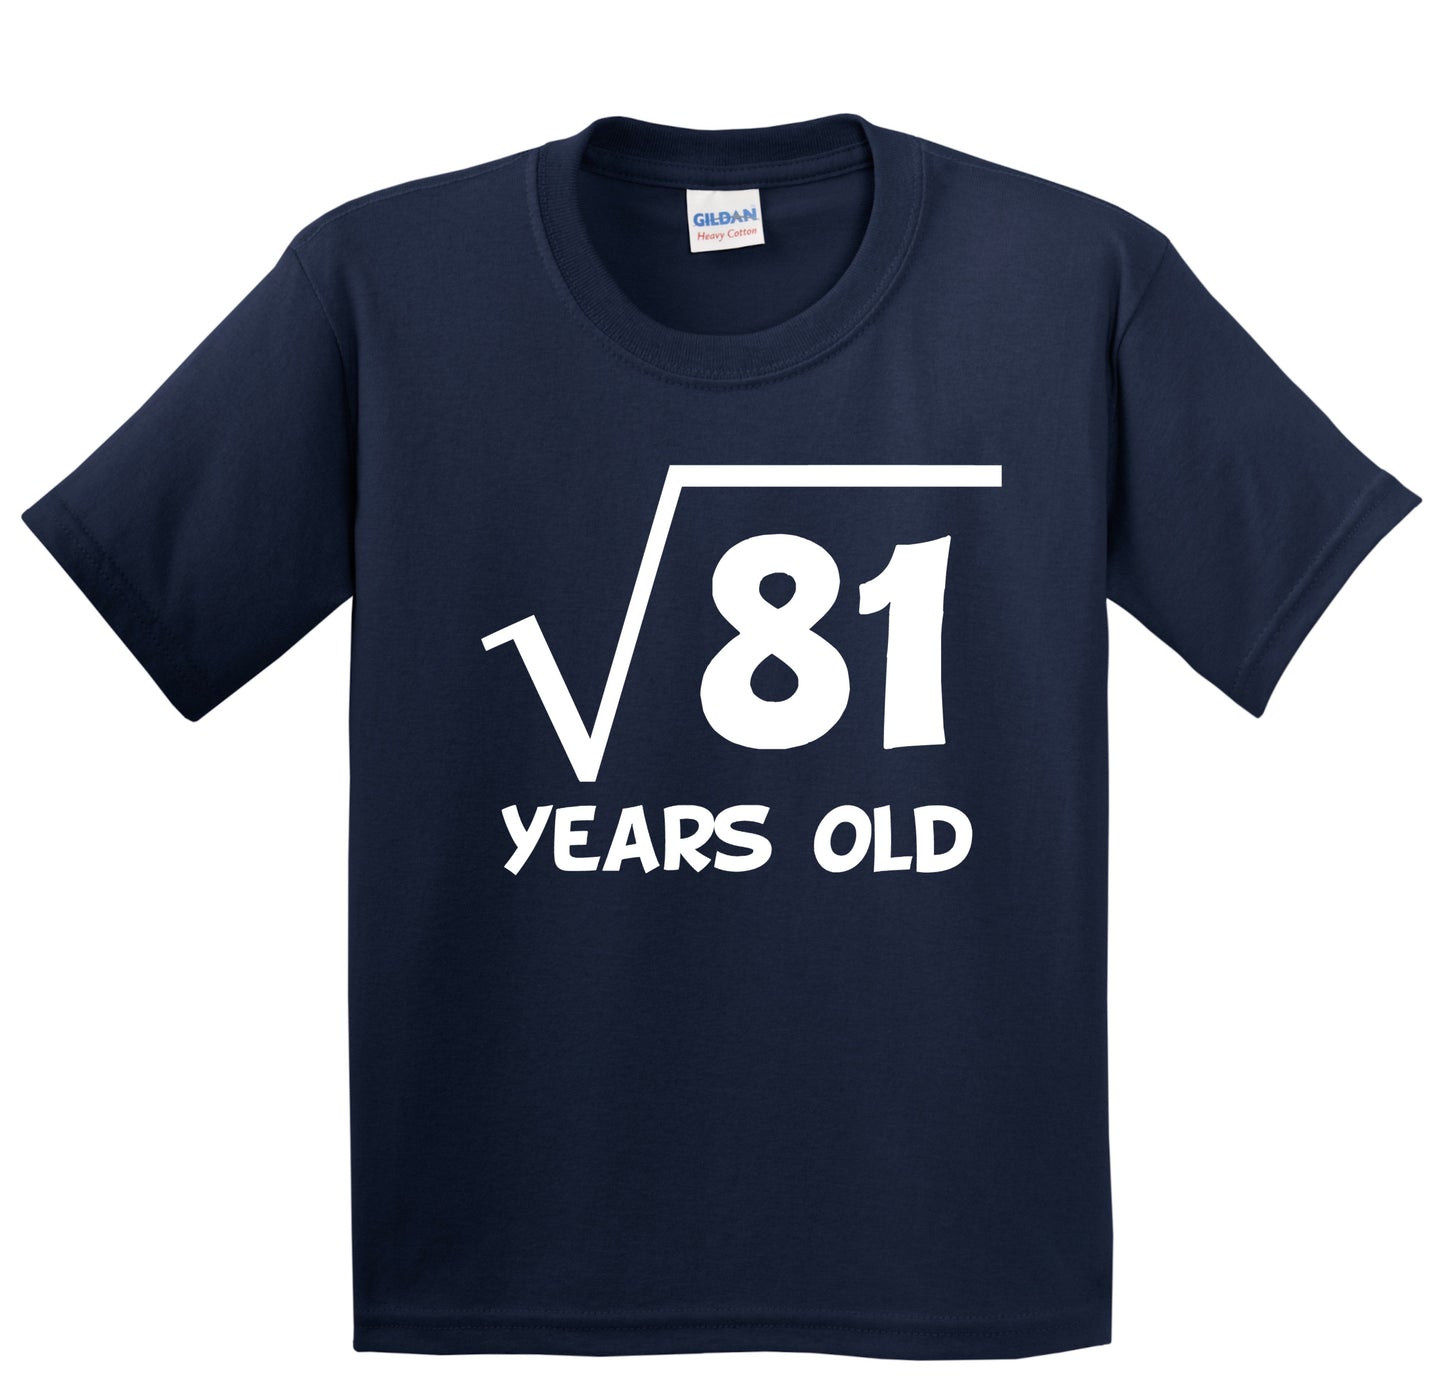 Kids 9th Birthday Shirt Square Root 9 Years Old Math T-Shirt